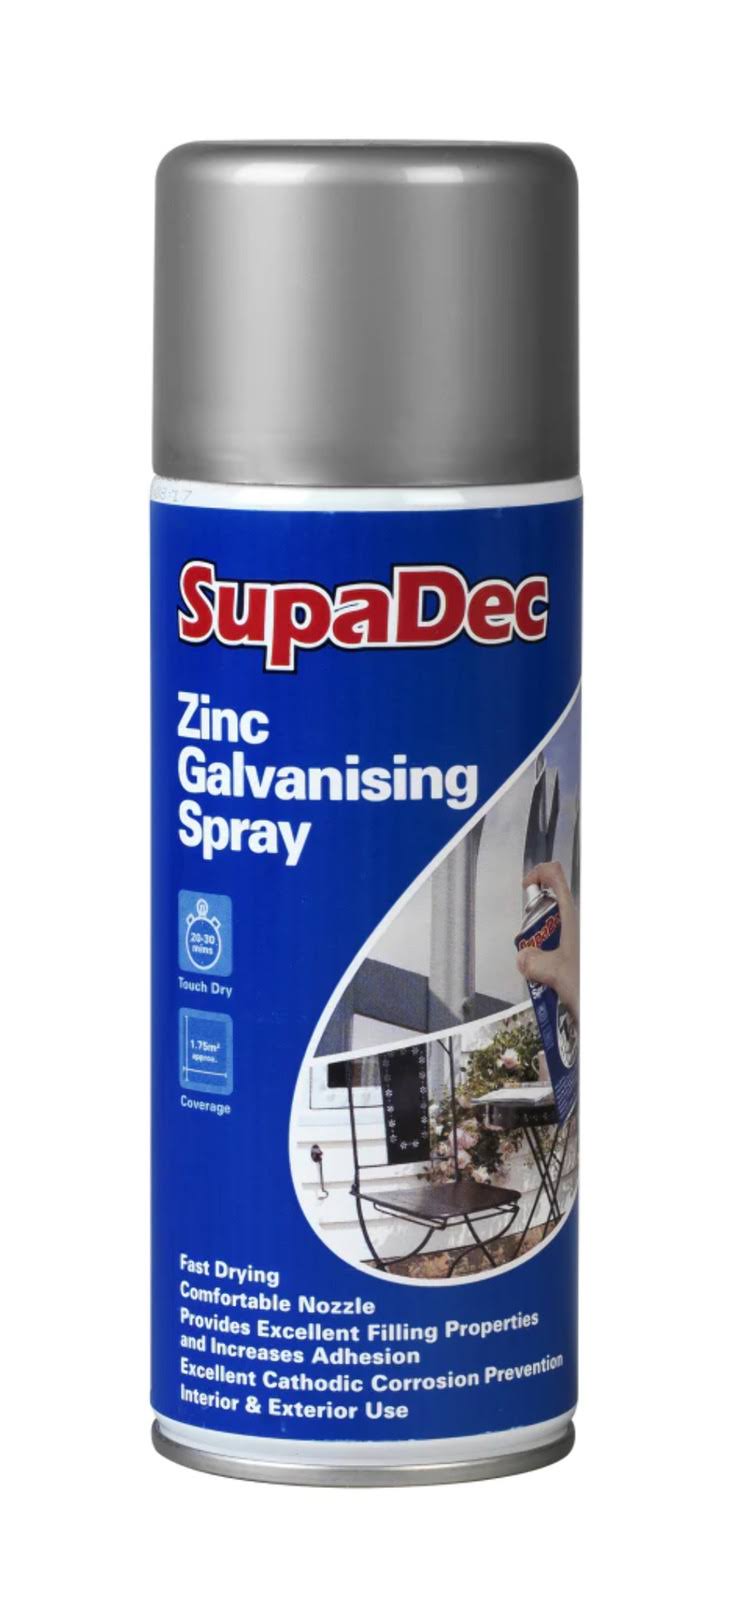 SupaDec Galvanising Spray